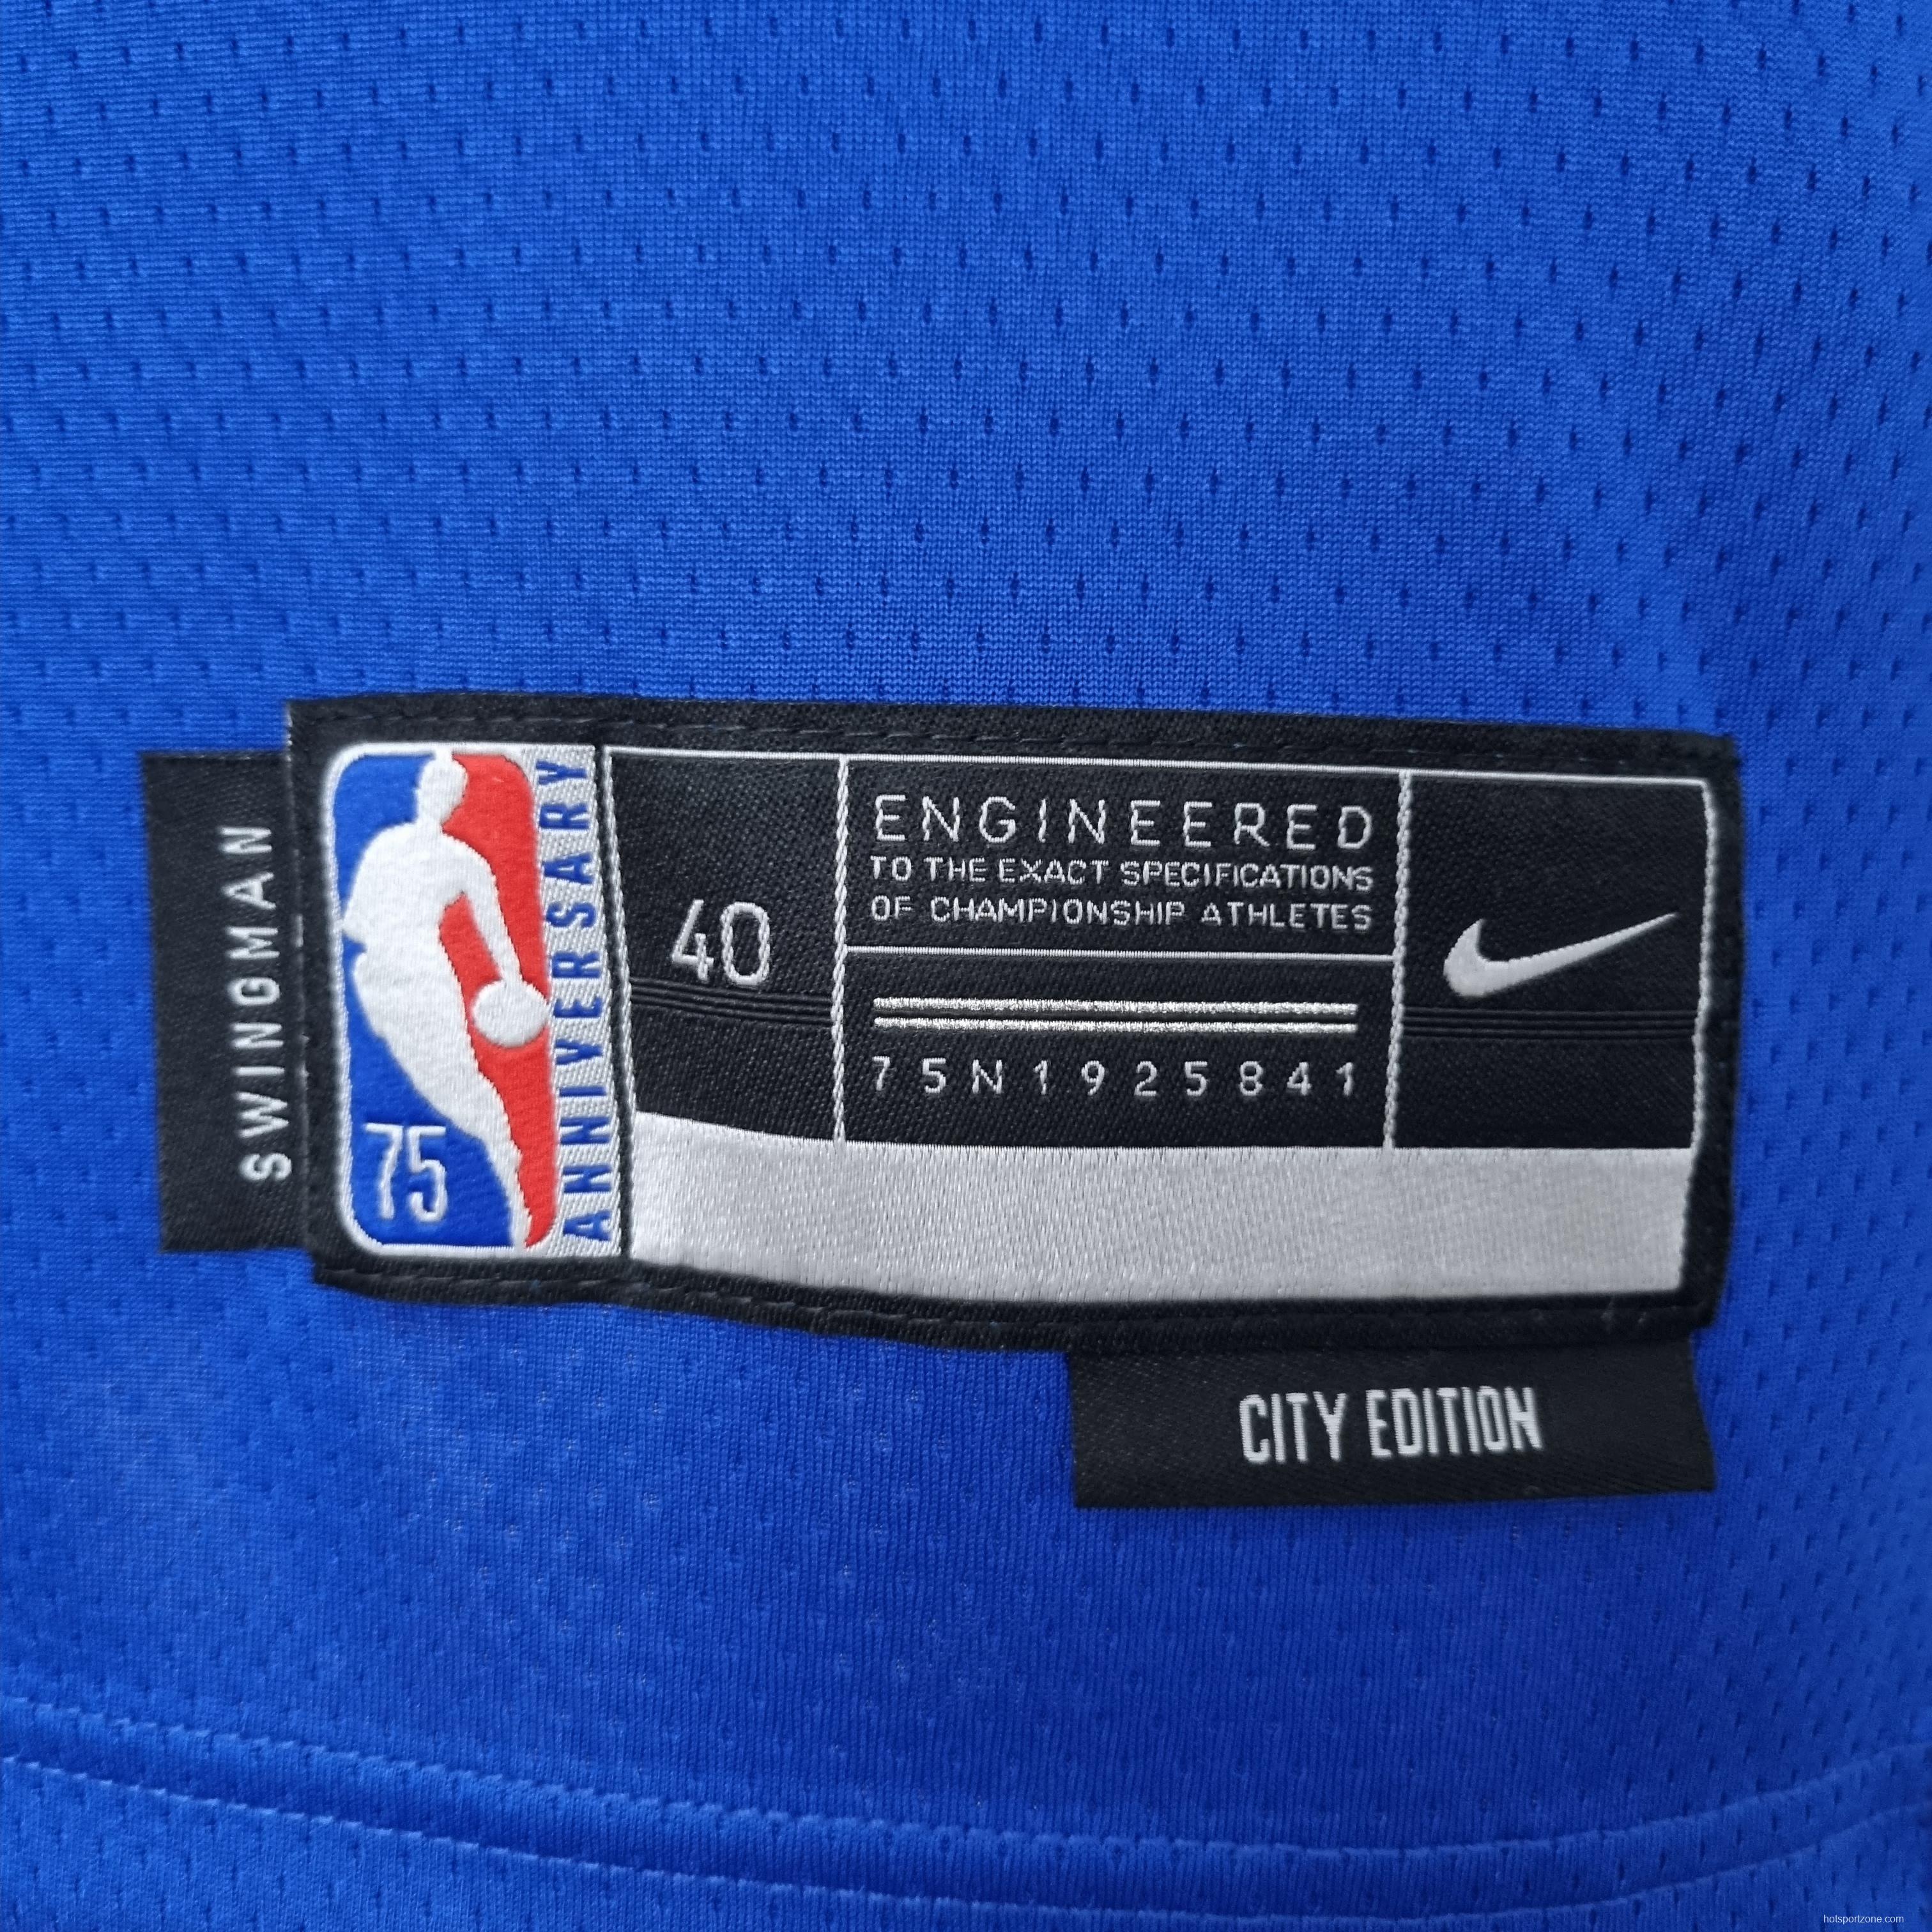 75th Anniversary Lin #17 New York Knicks Blue NBA Jersey